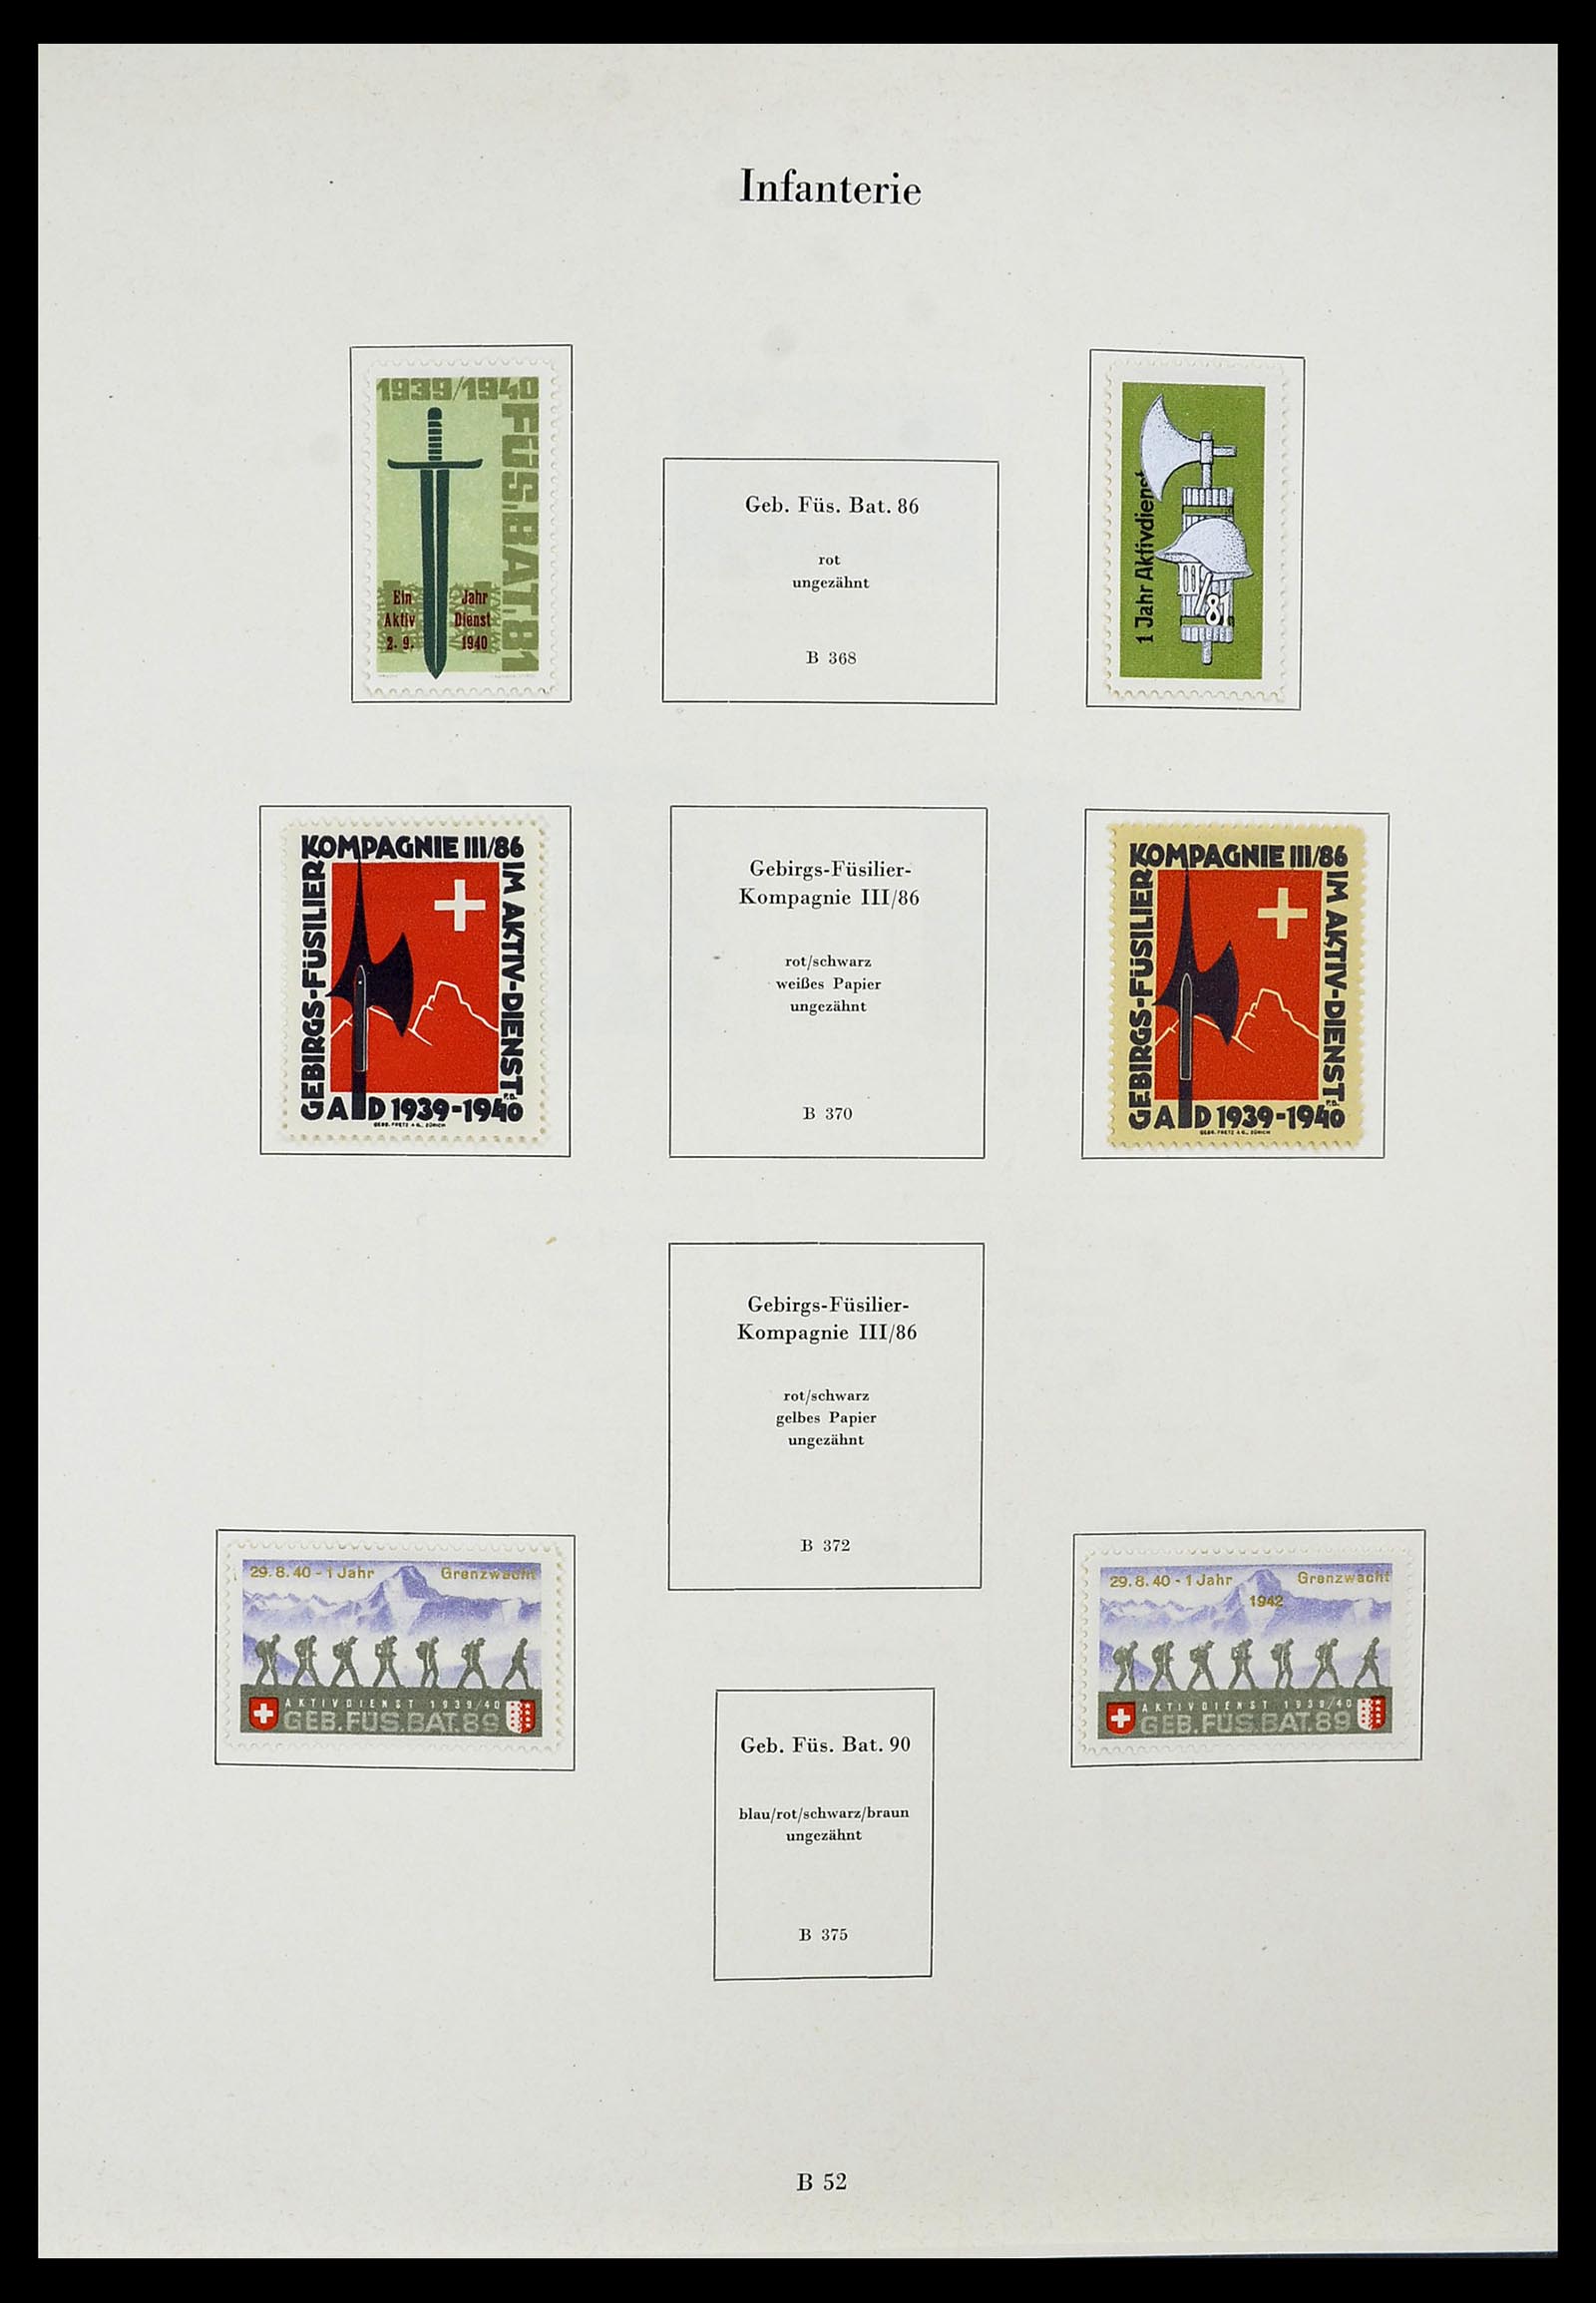 34234 077 - Stamp collection 34234 Switzerland soldier stamps 1939-1945.